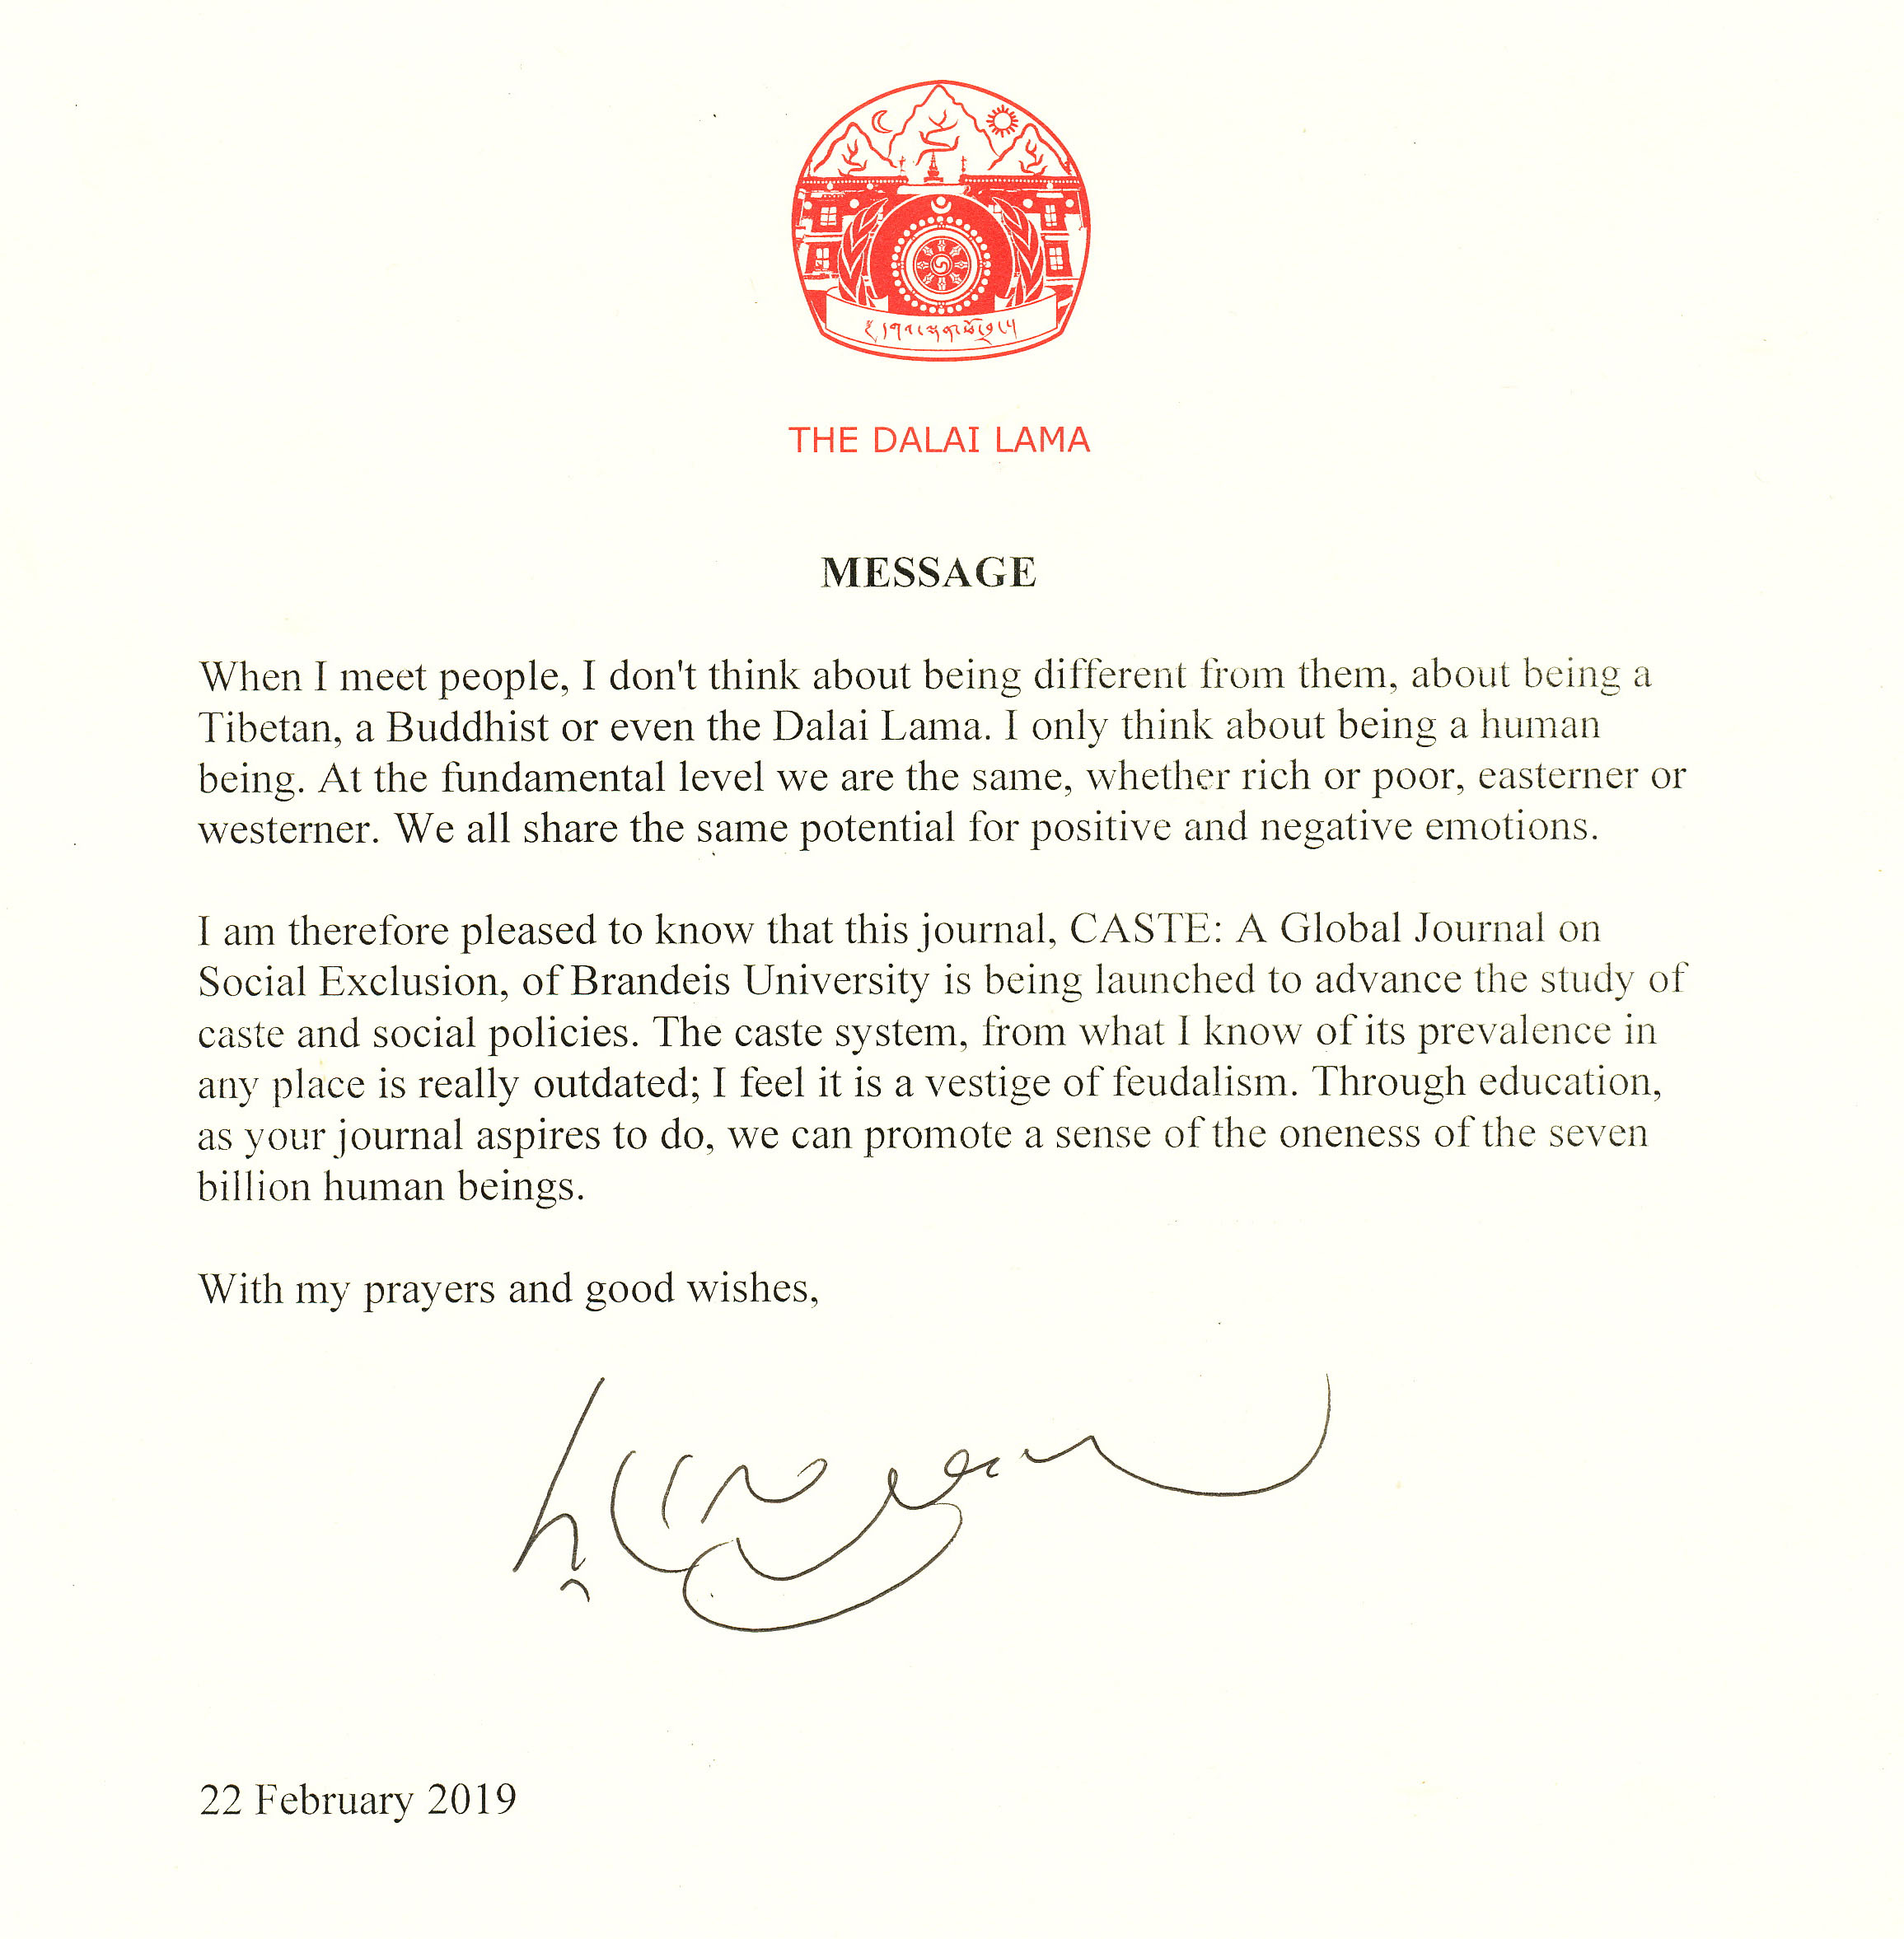 Letter from Dalai Lama congratulating J-CASTE